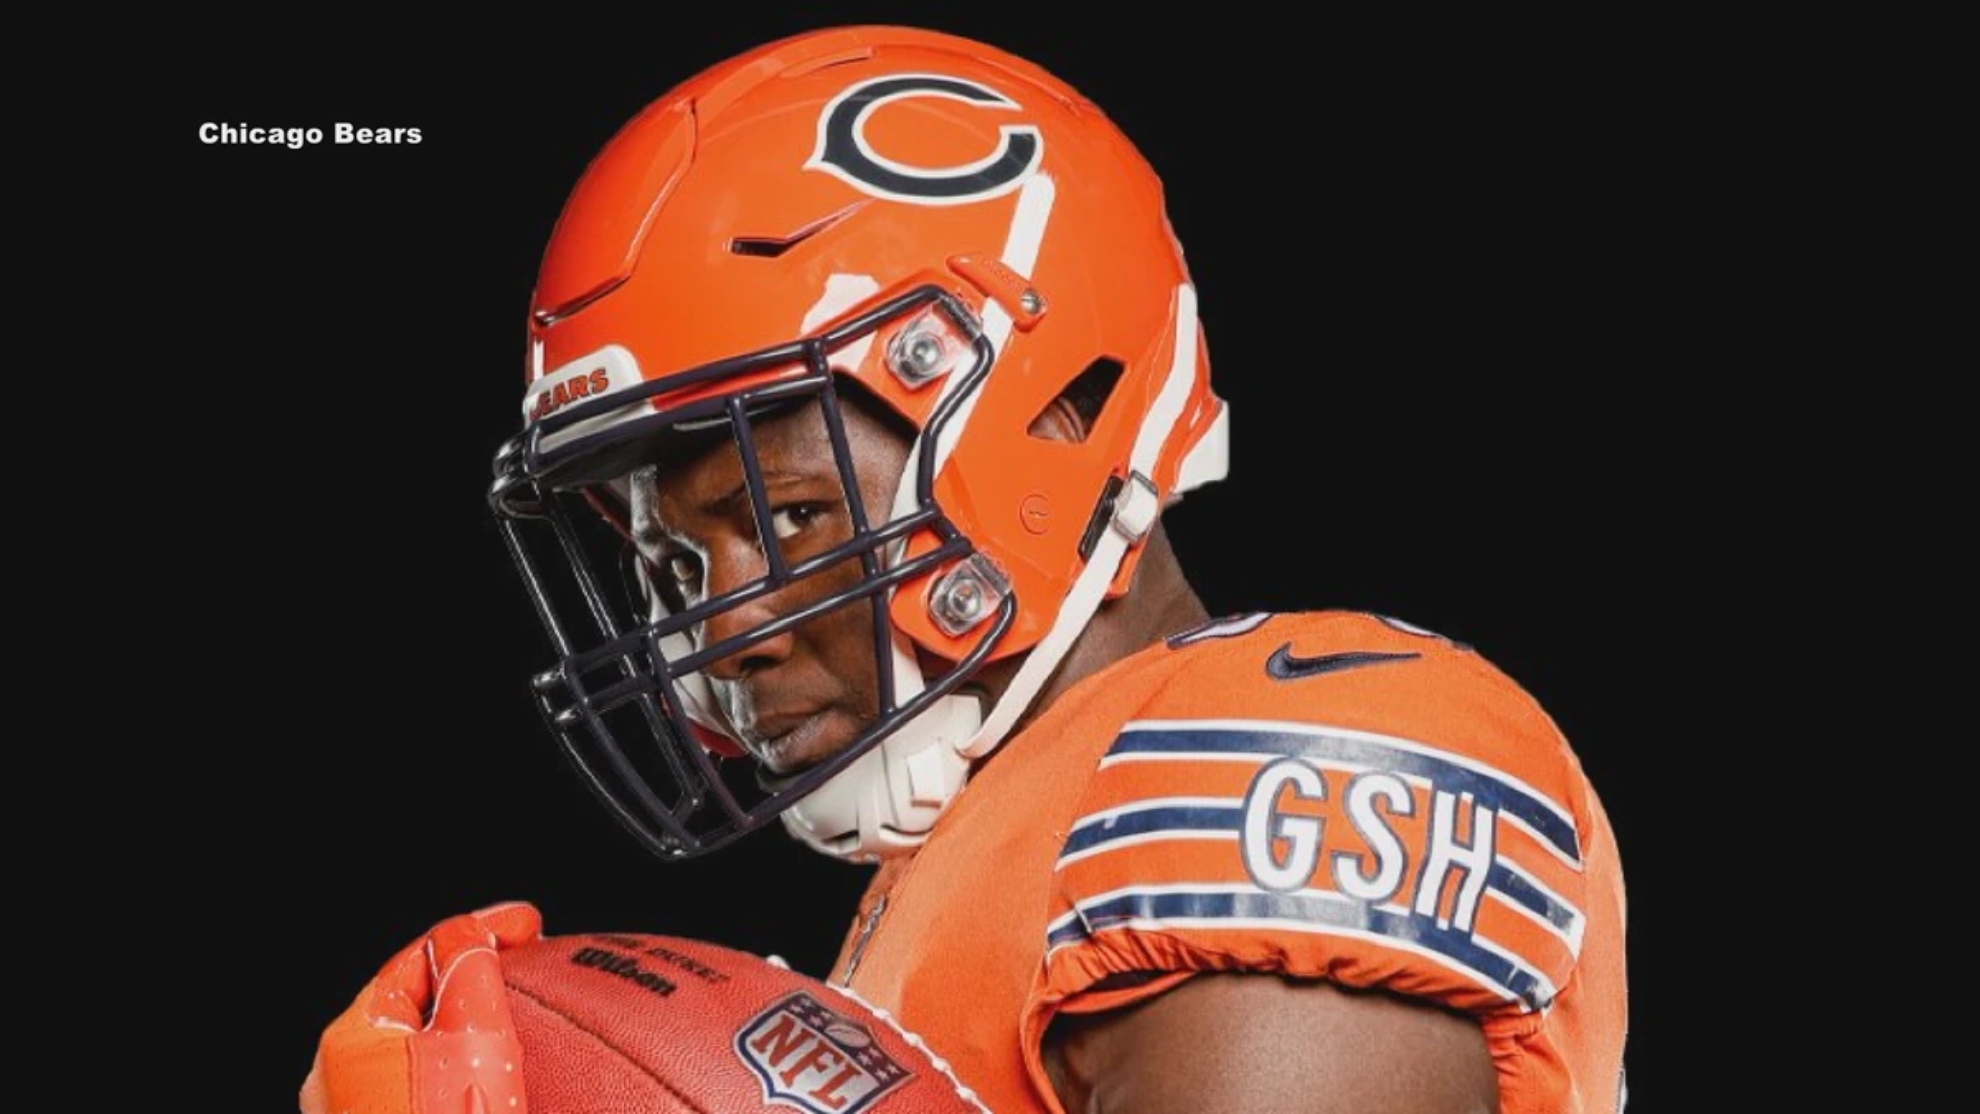 Cleveland Browns take a dig at Chicago Bears new orange helmet